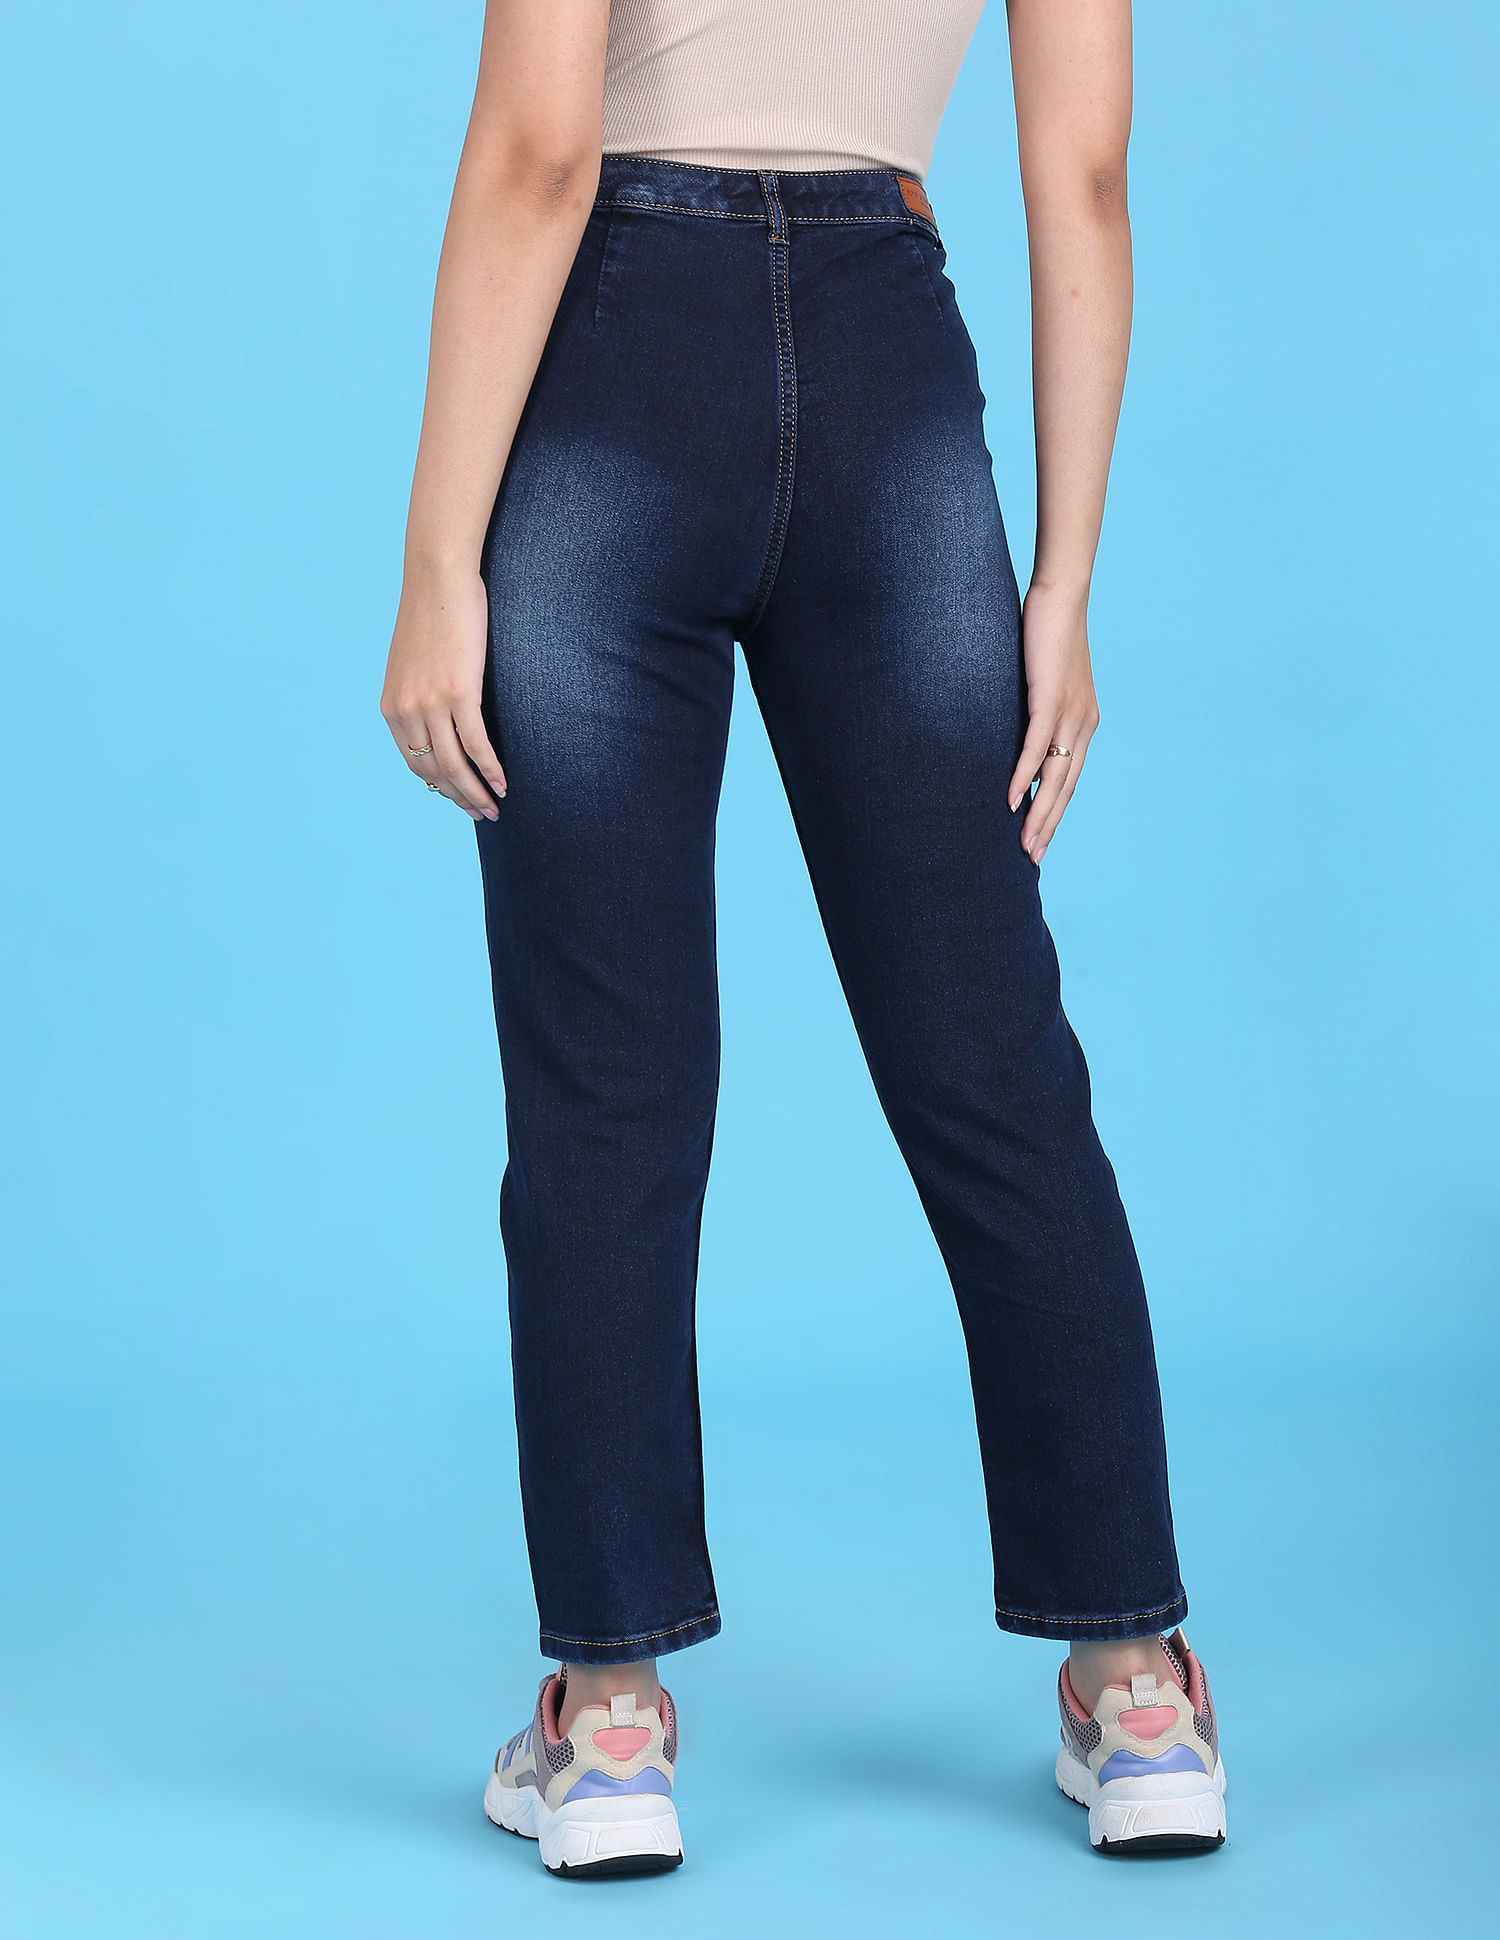 Straight Leg Jeans - Indigo Denim, Standard High-Rise Fit